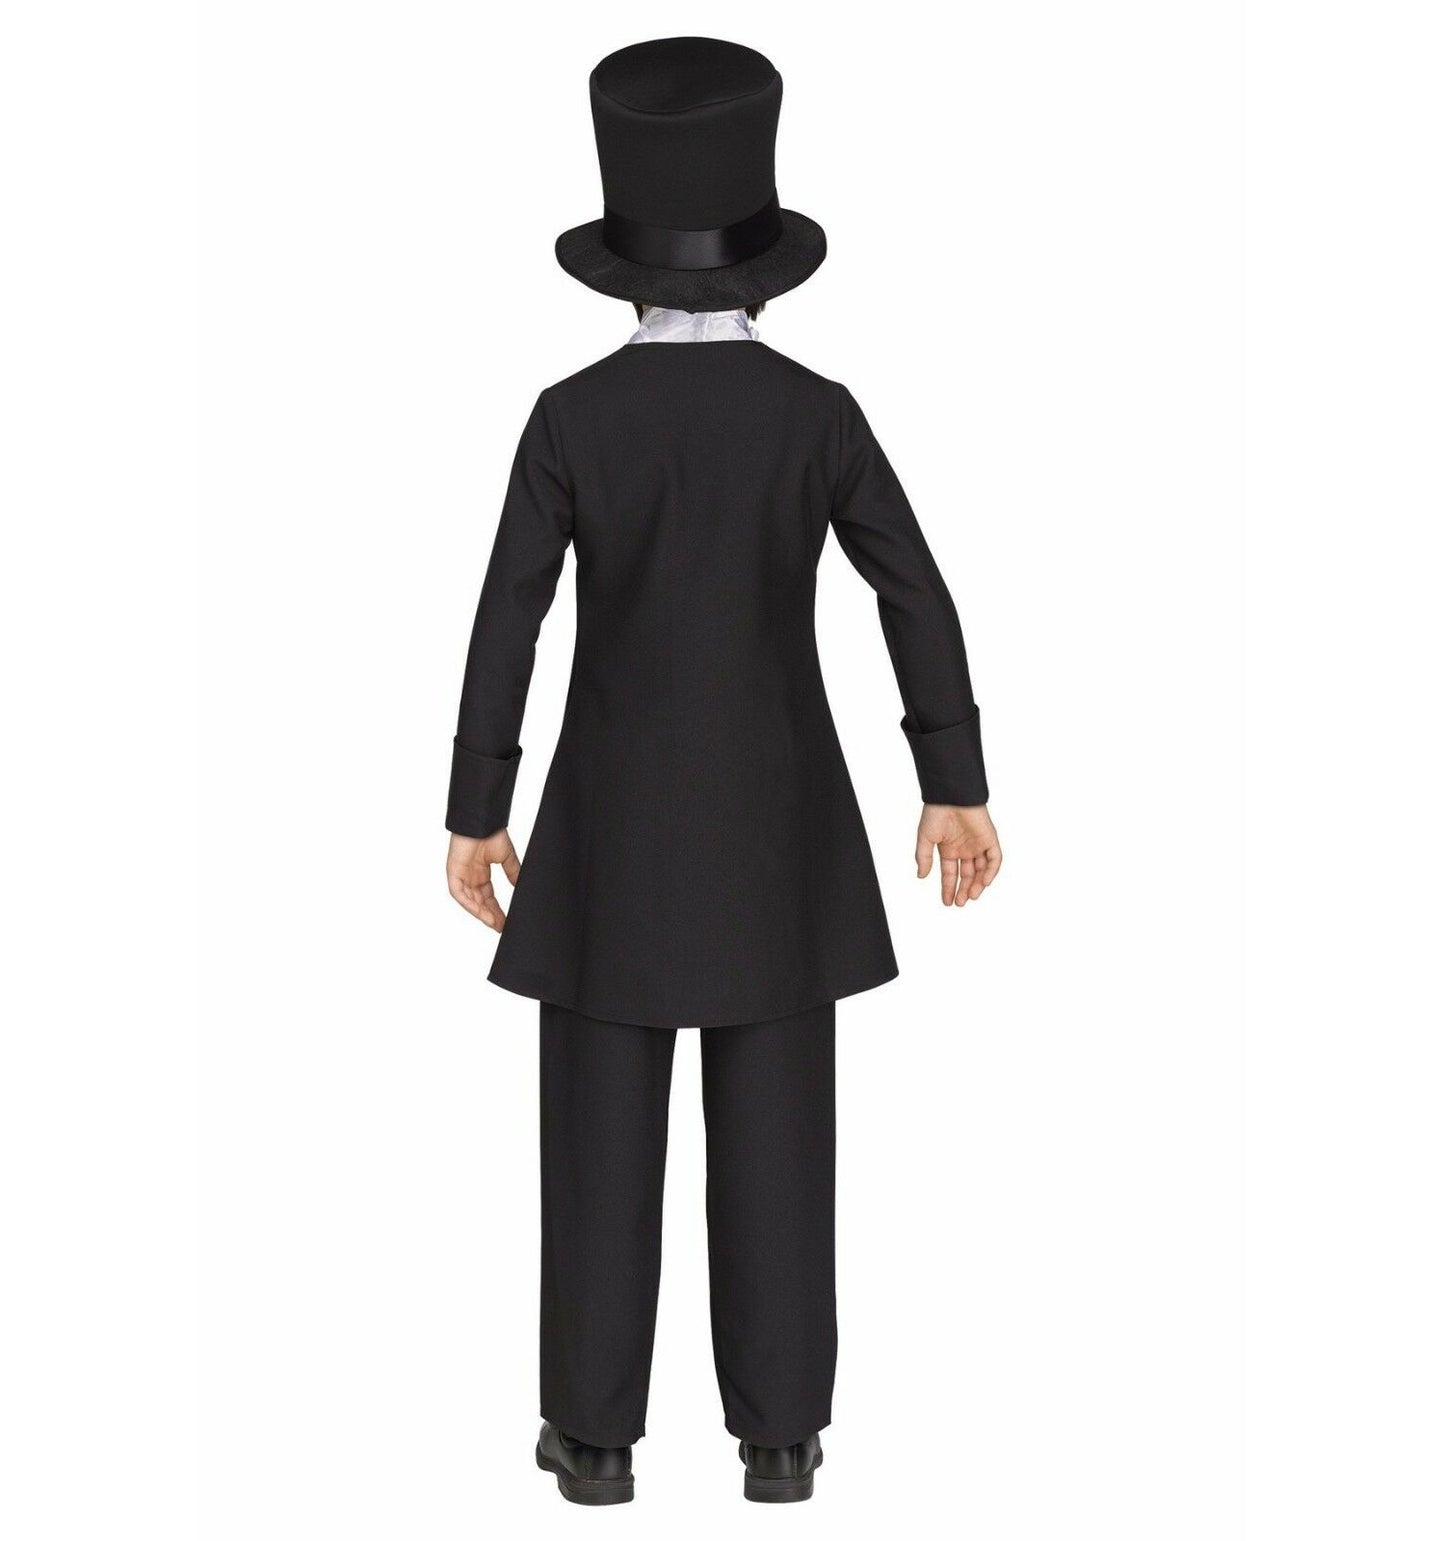 Abe Abraham Lincoln President Historical Child Costume